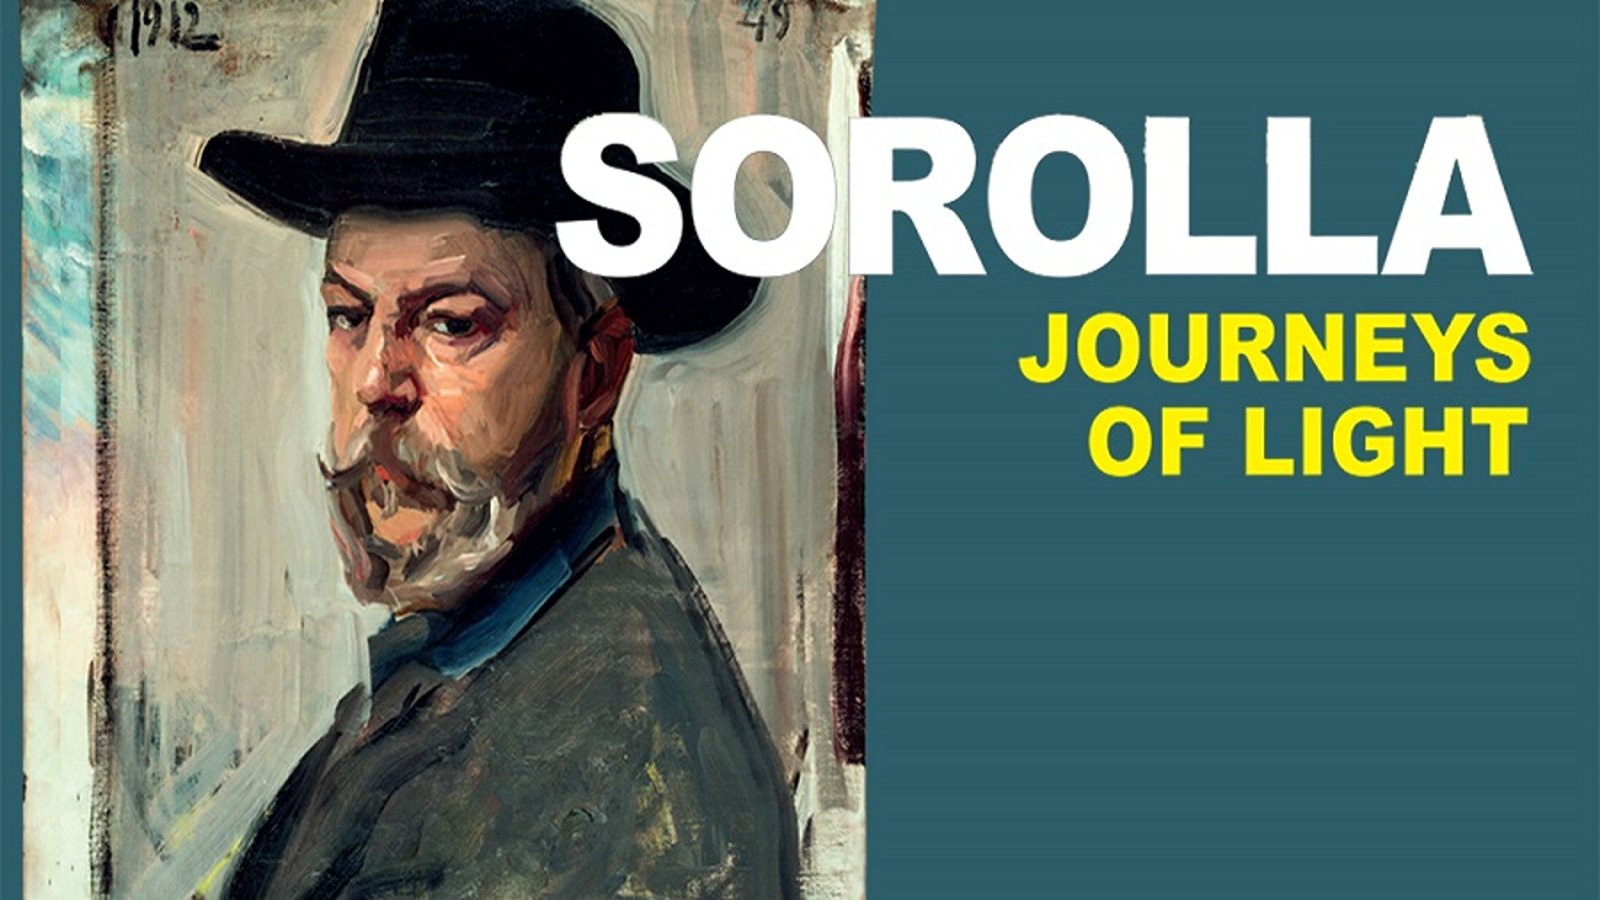 Joaquin Sorolla: Journeys of Light - A Portrait of a Great Spanish Painter